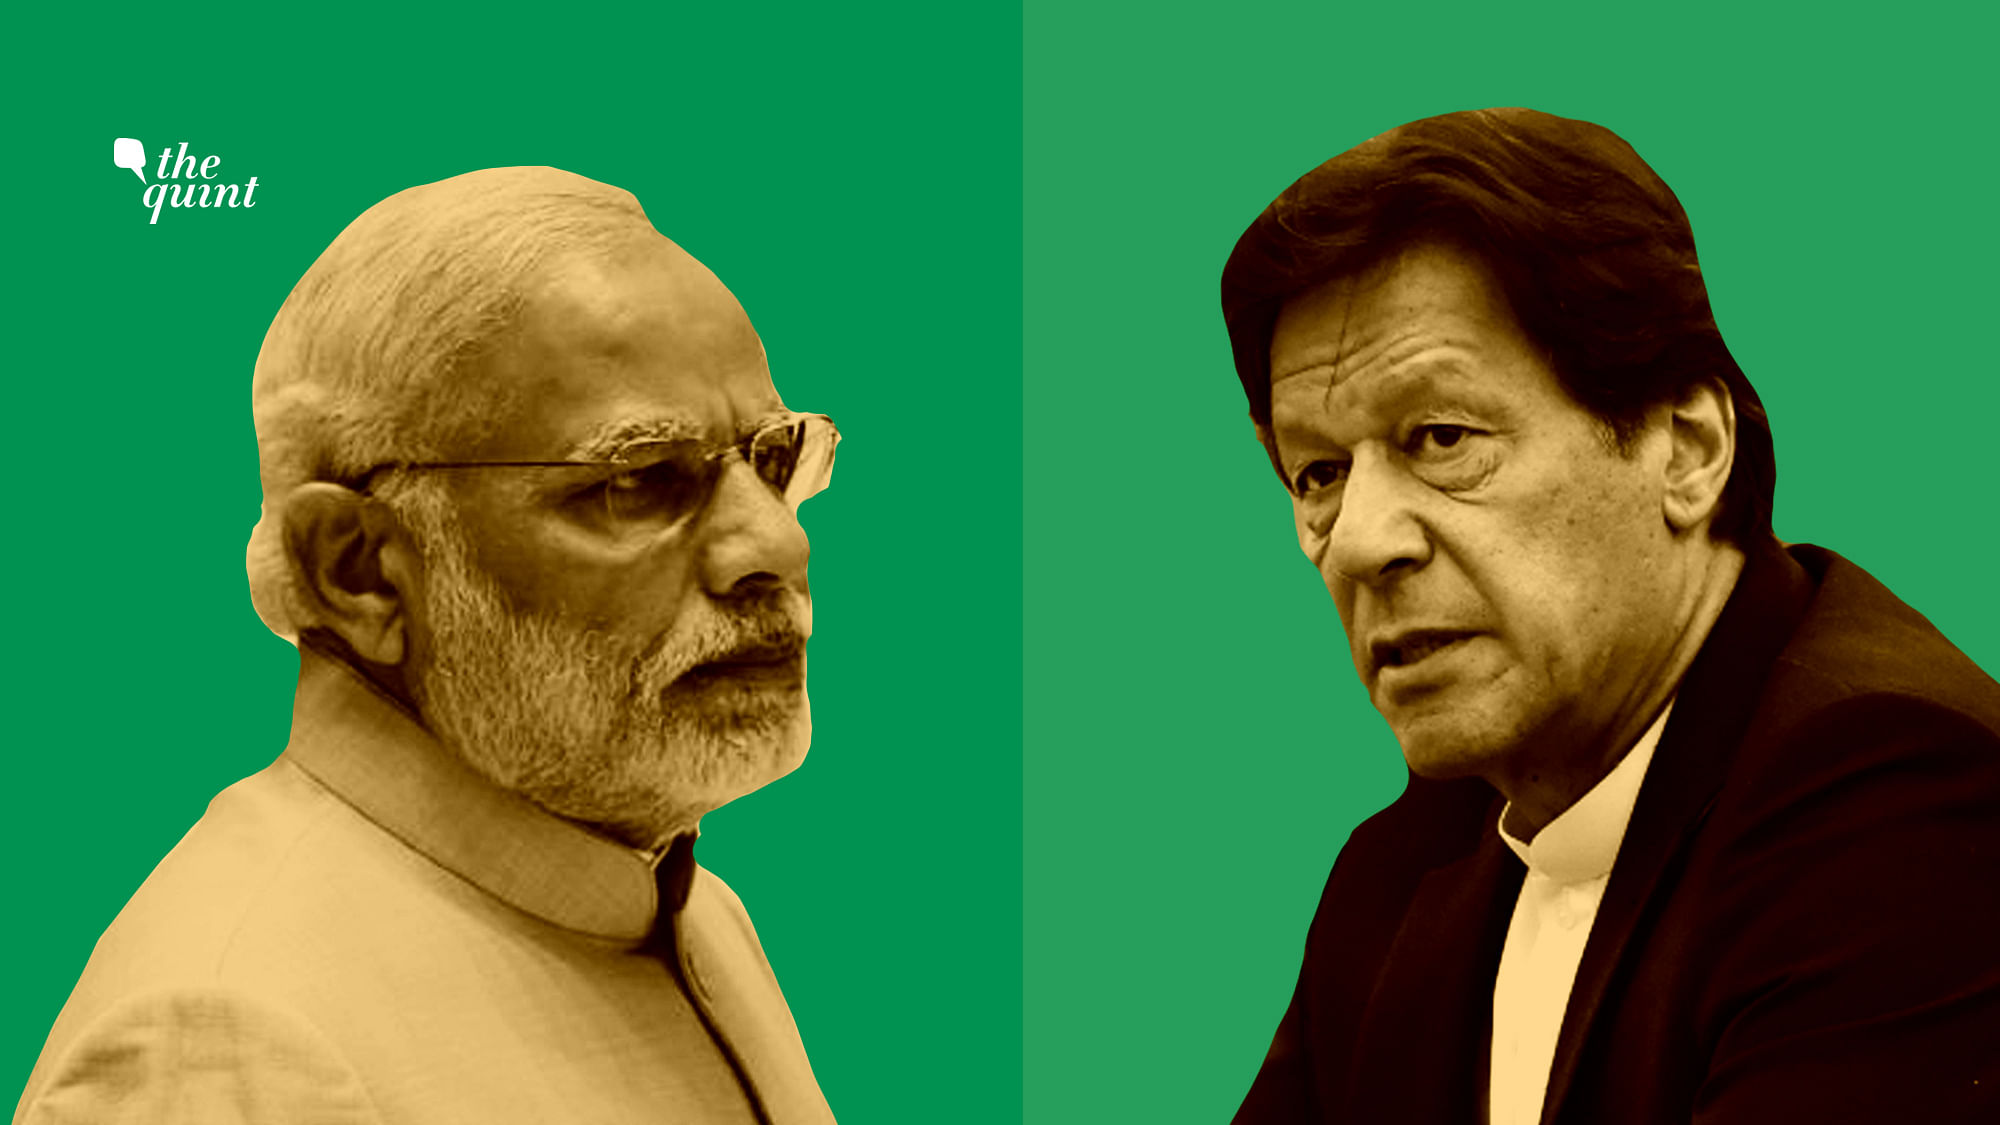 Image of PM Modi (L) and PM Imran Khan (R) used for representational purposes.